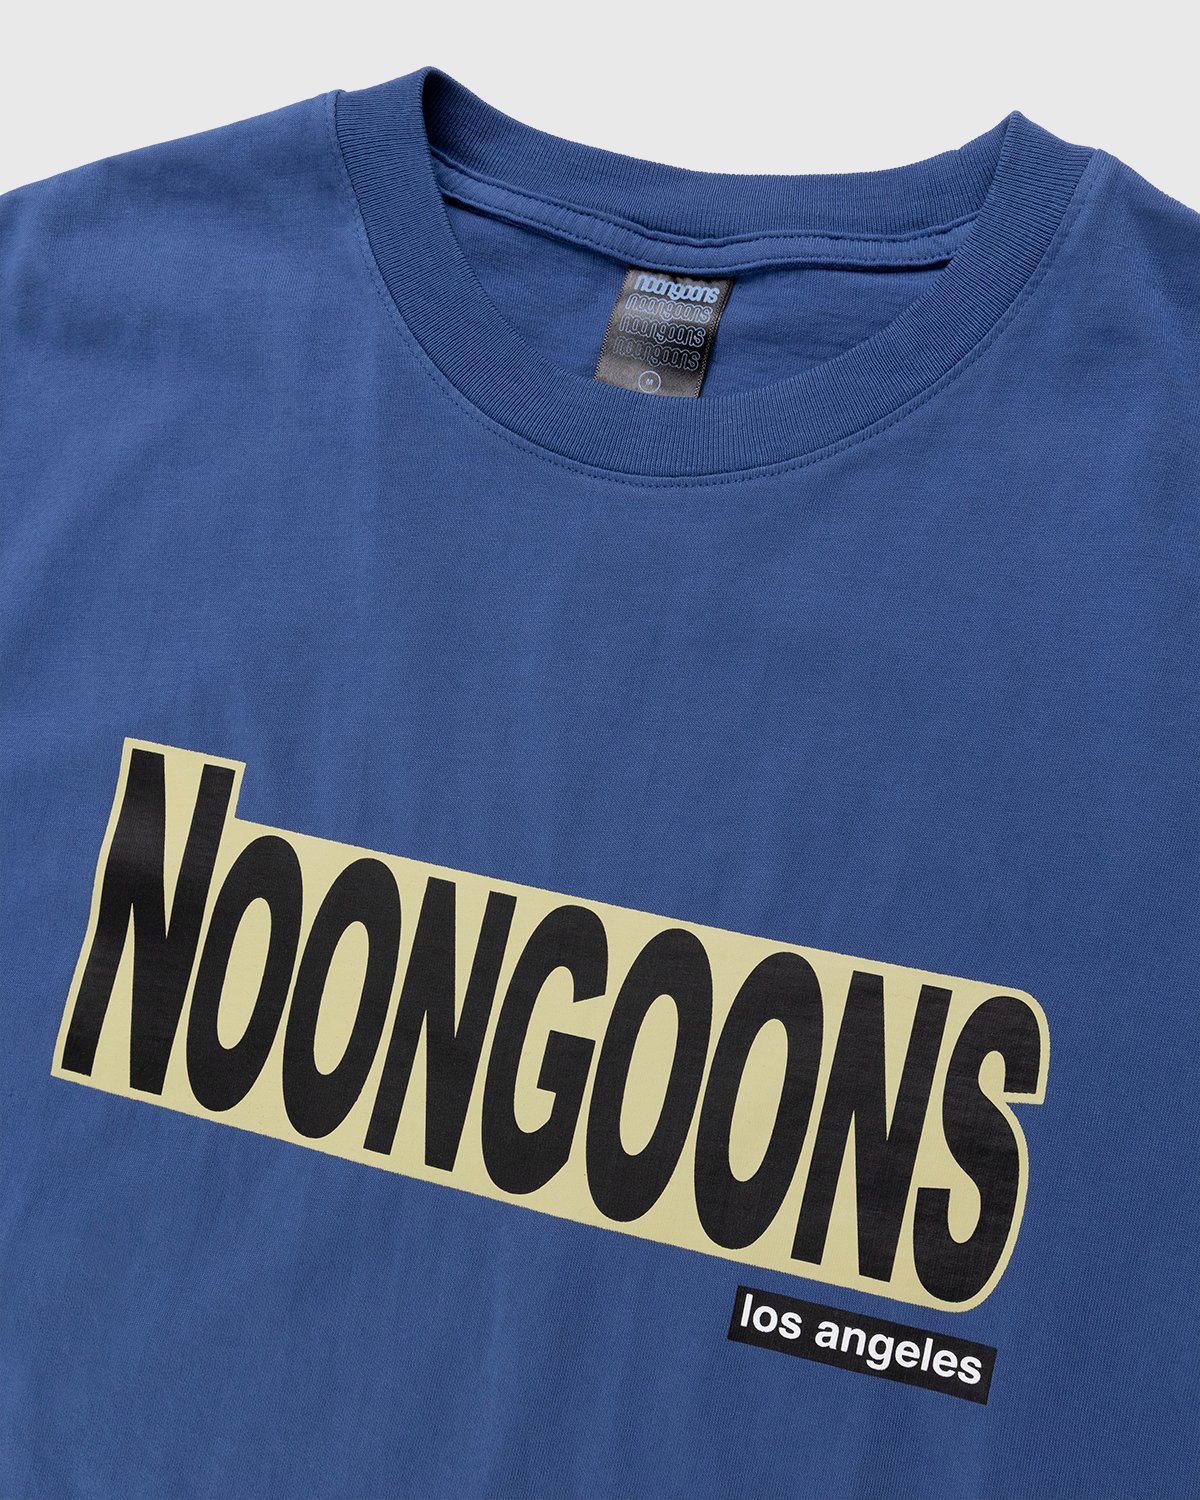 Noon Goons - My Block Tshirt Navy - Clothing - Blue - Image 3